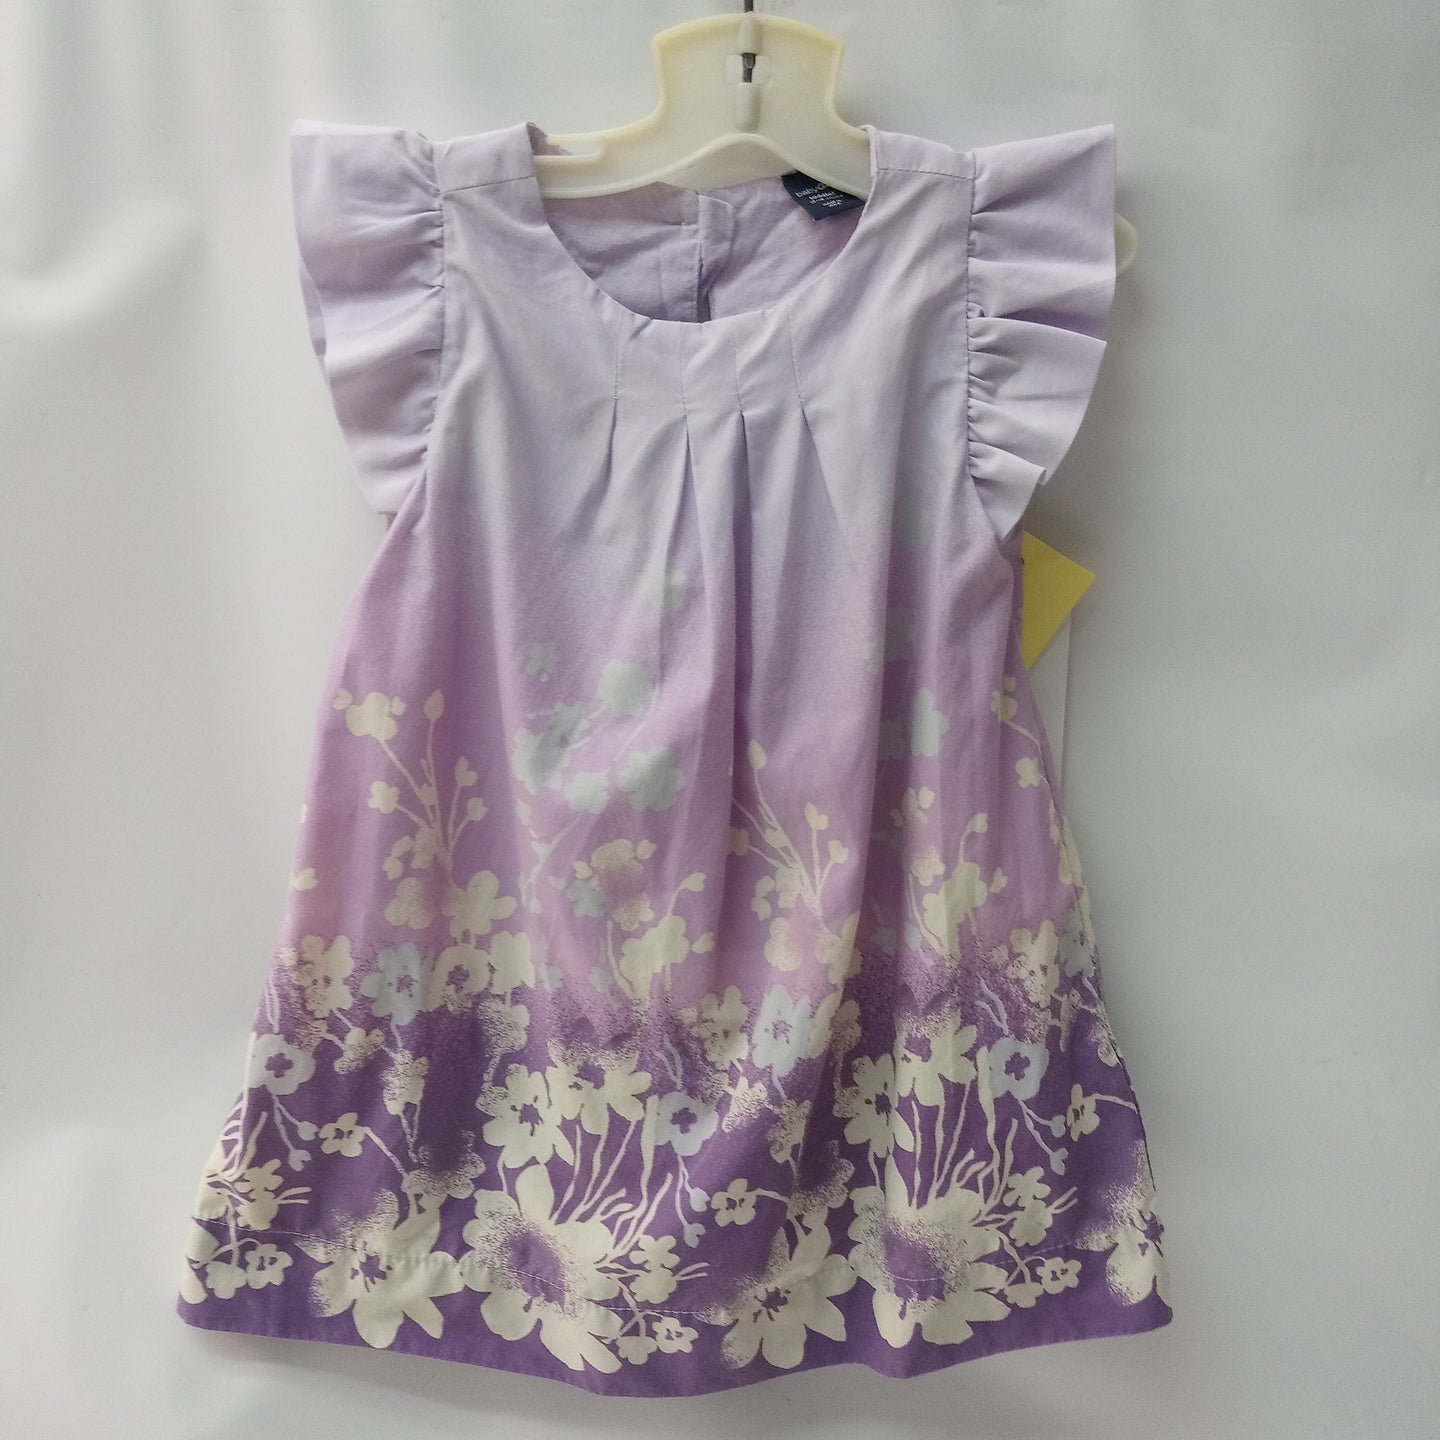 Short Sleeve Dress By Baby Gap Size 12m-18m